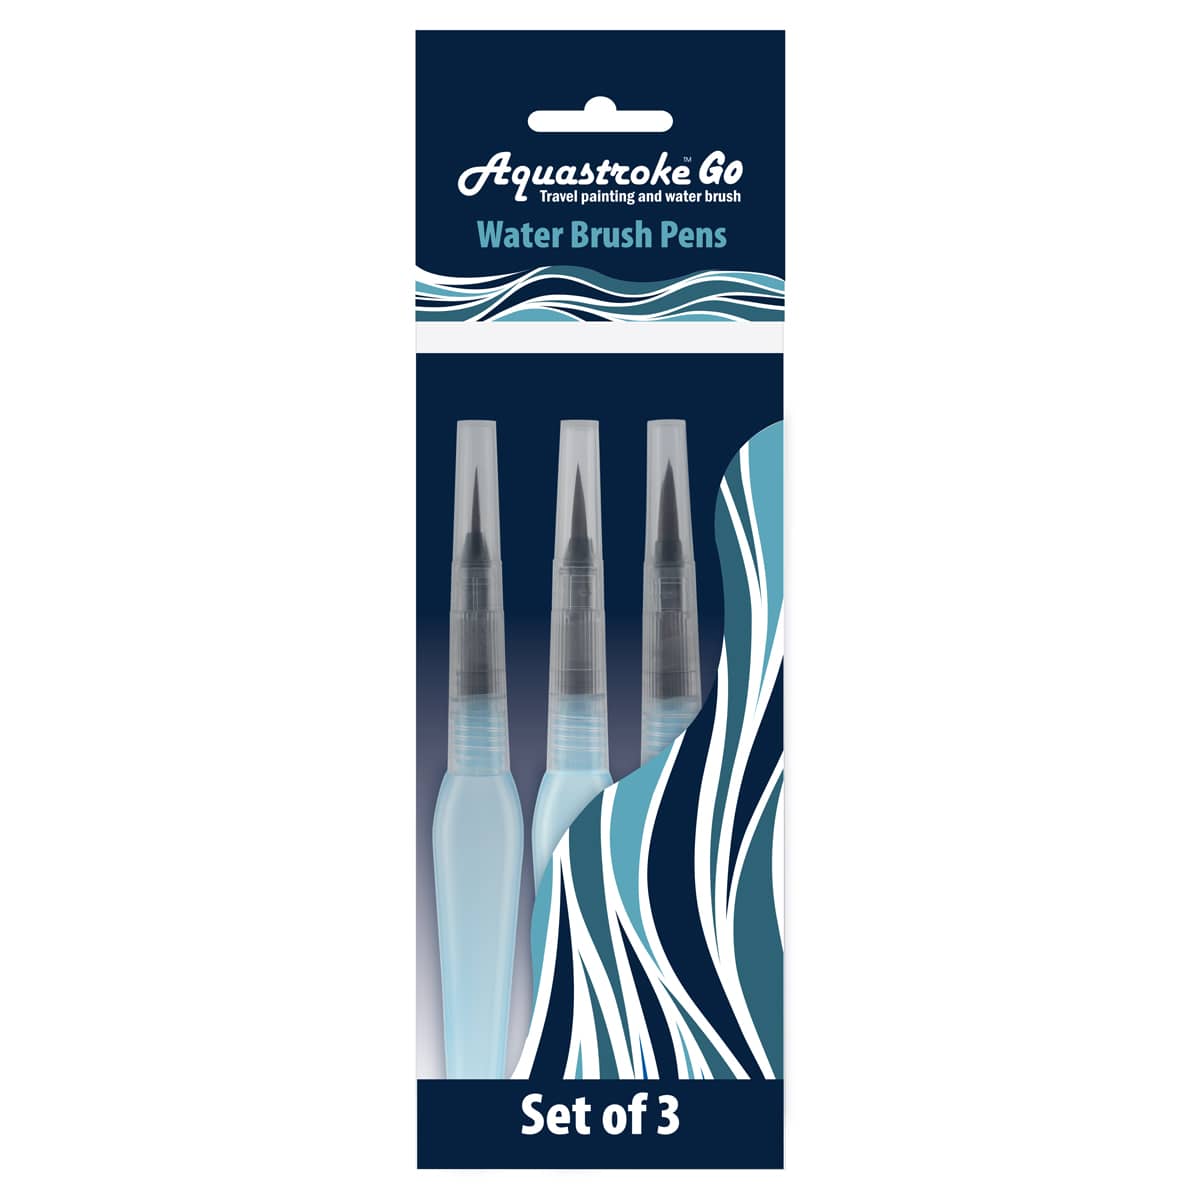 Aquastroke-Go Set of 3 Water Brush Pens